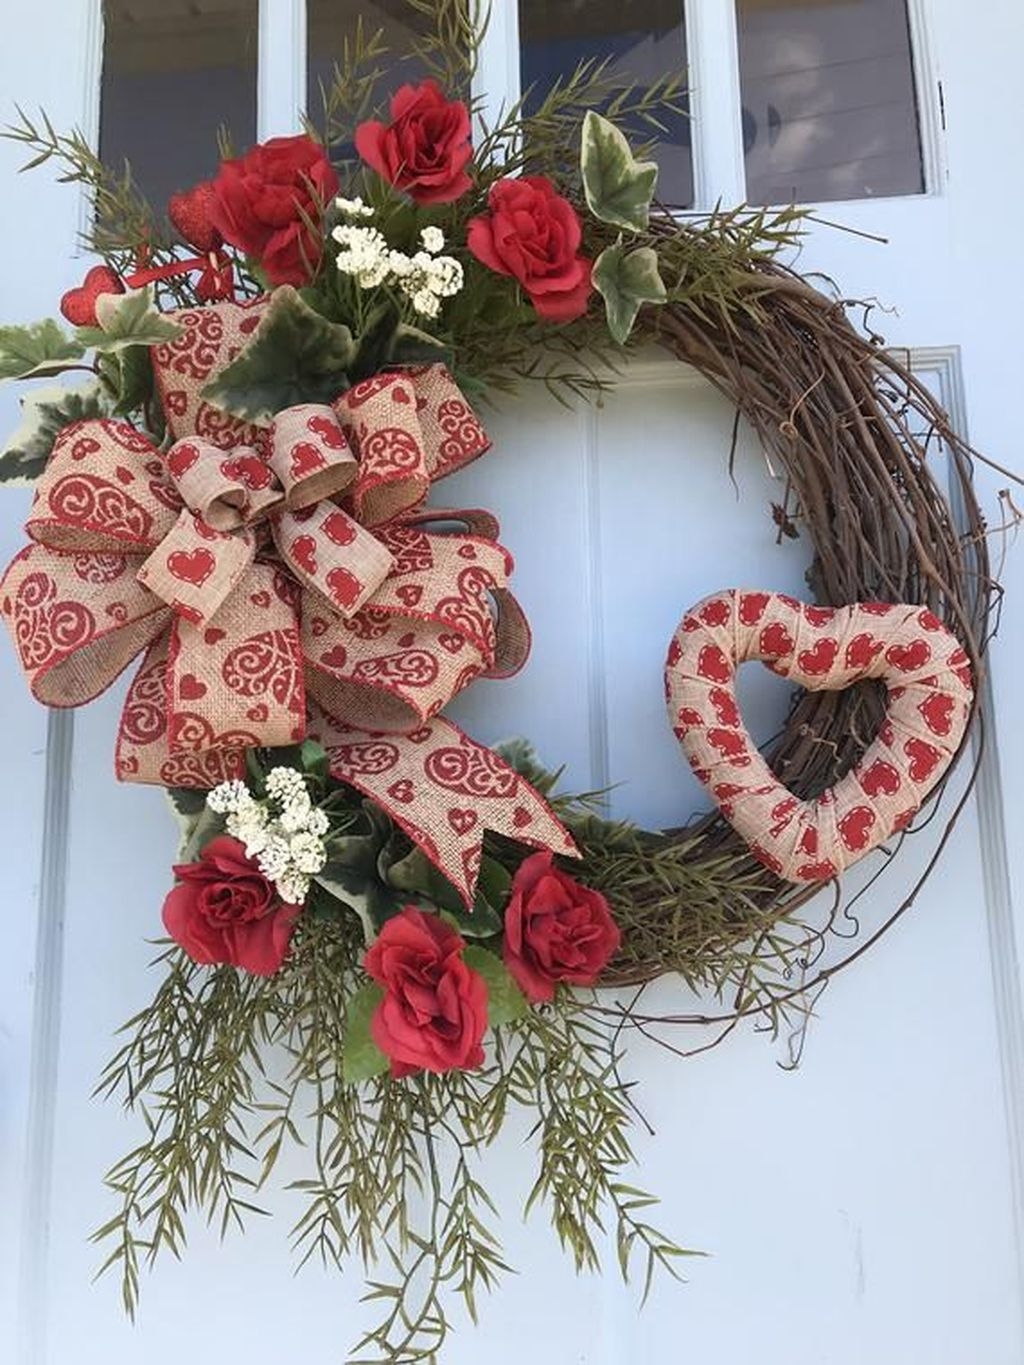 Cute Valentine Door Decorations Ideas To Spread The Seasons Greetings 11